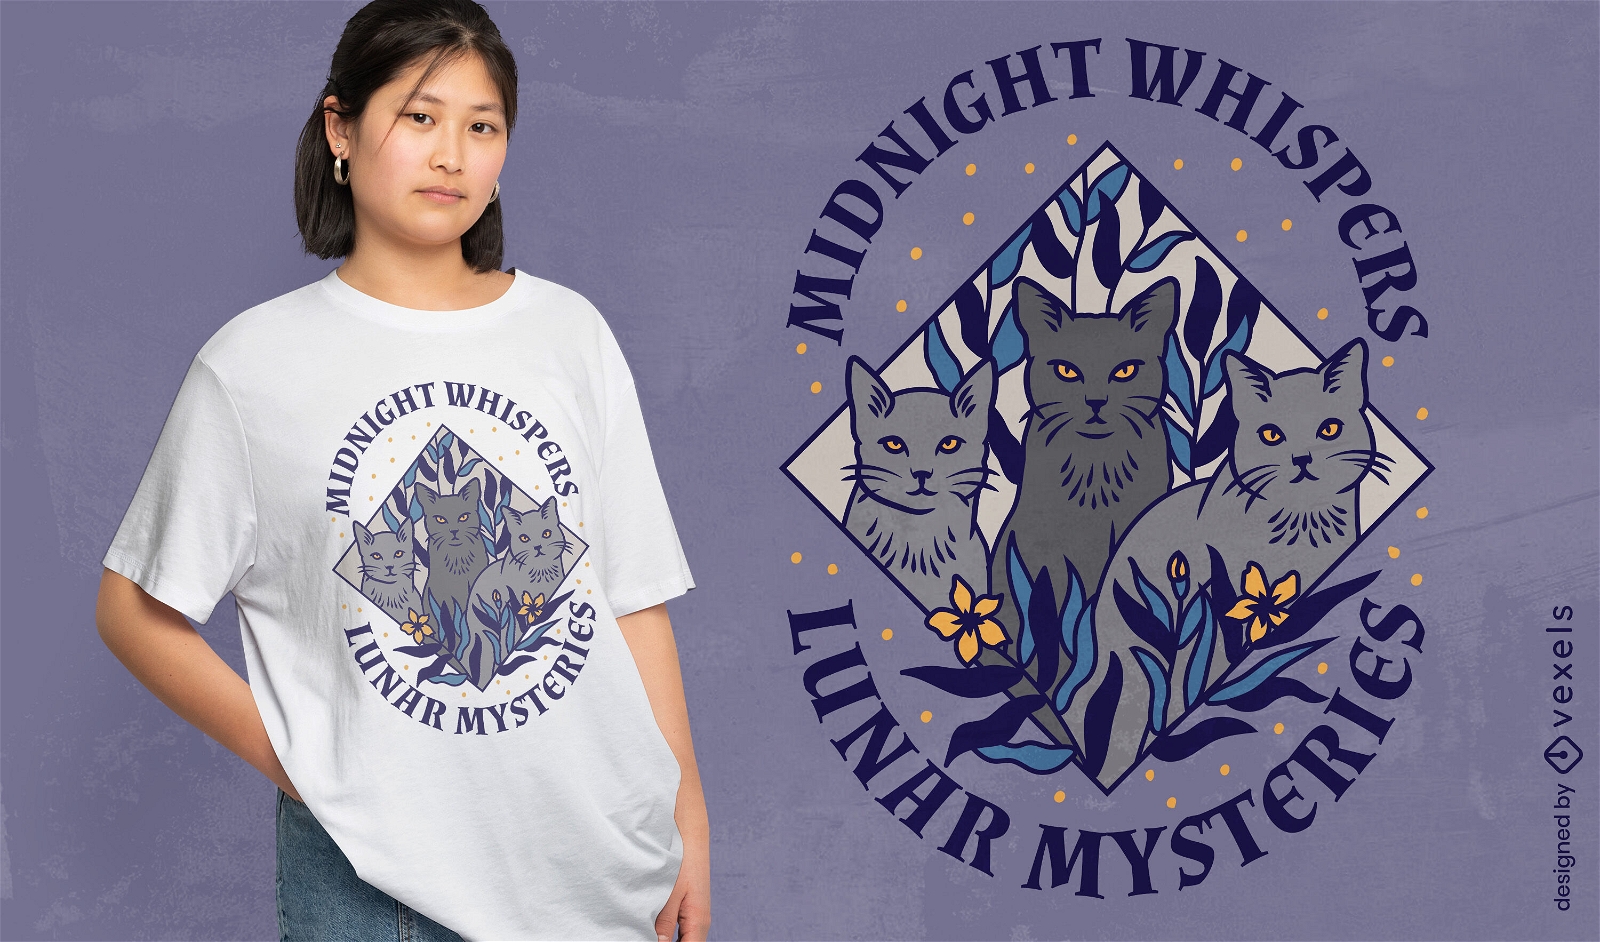 Dise?o de camiseta Lunar Cat Mysteries.